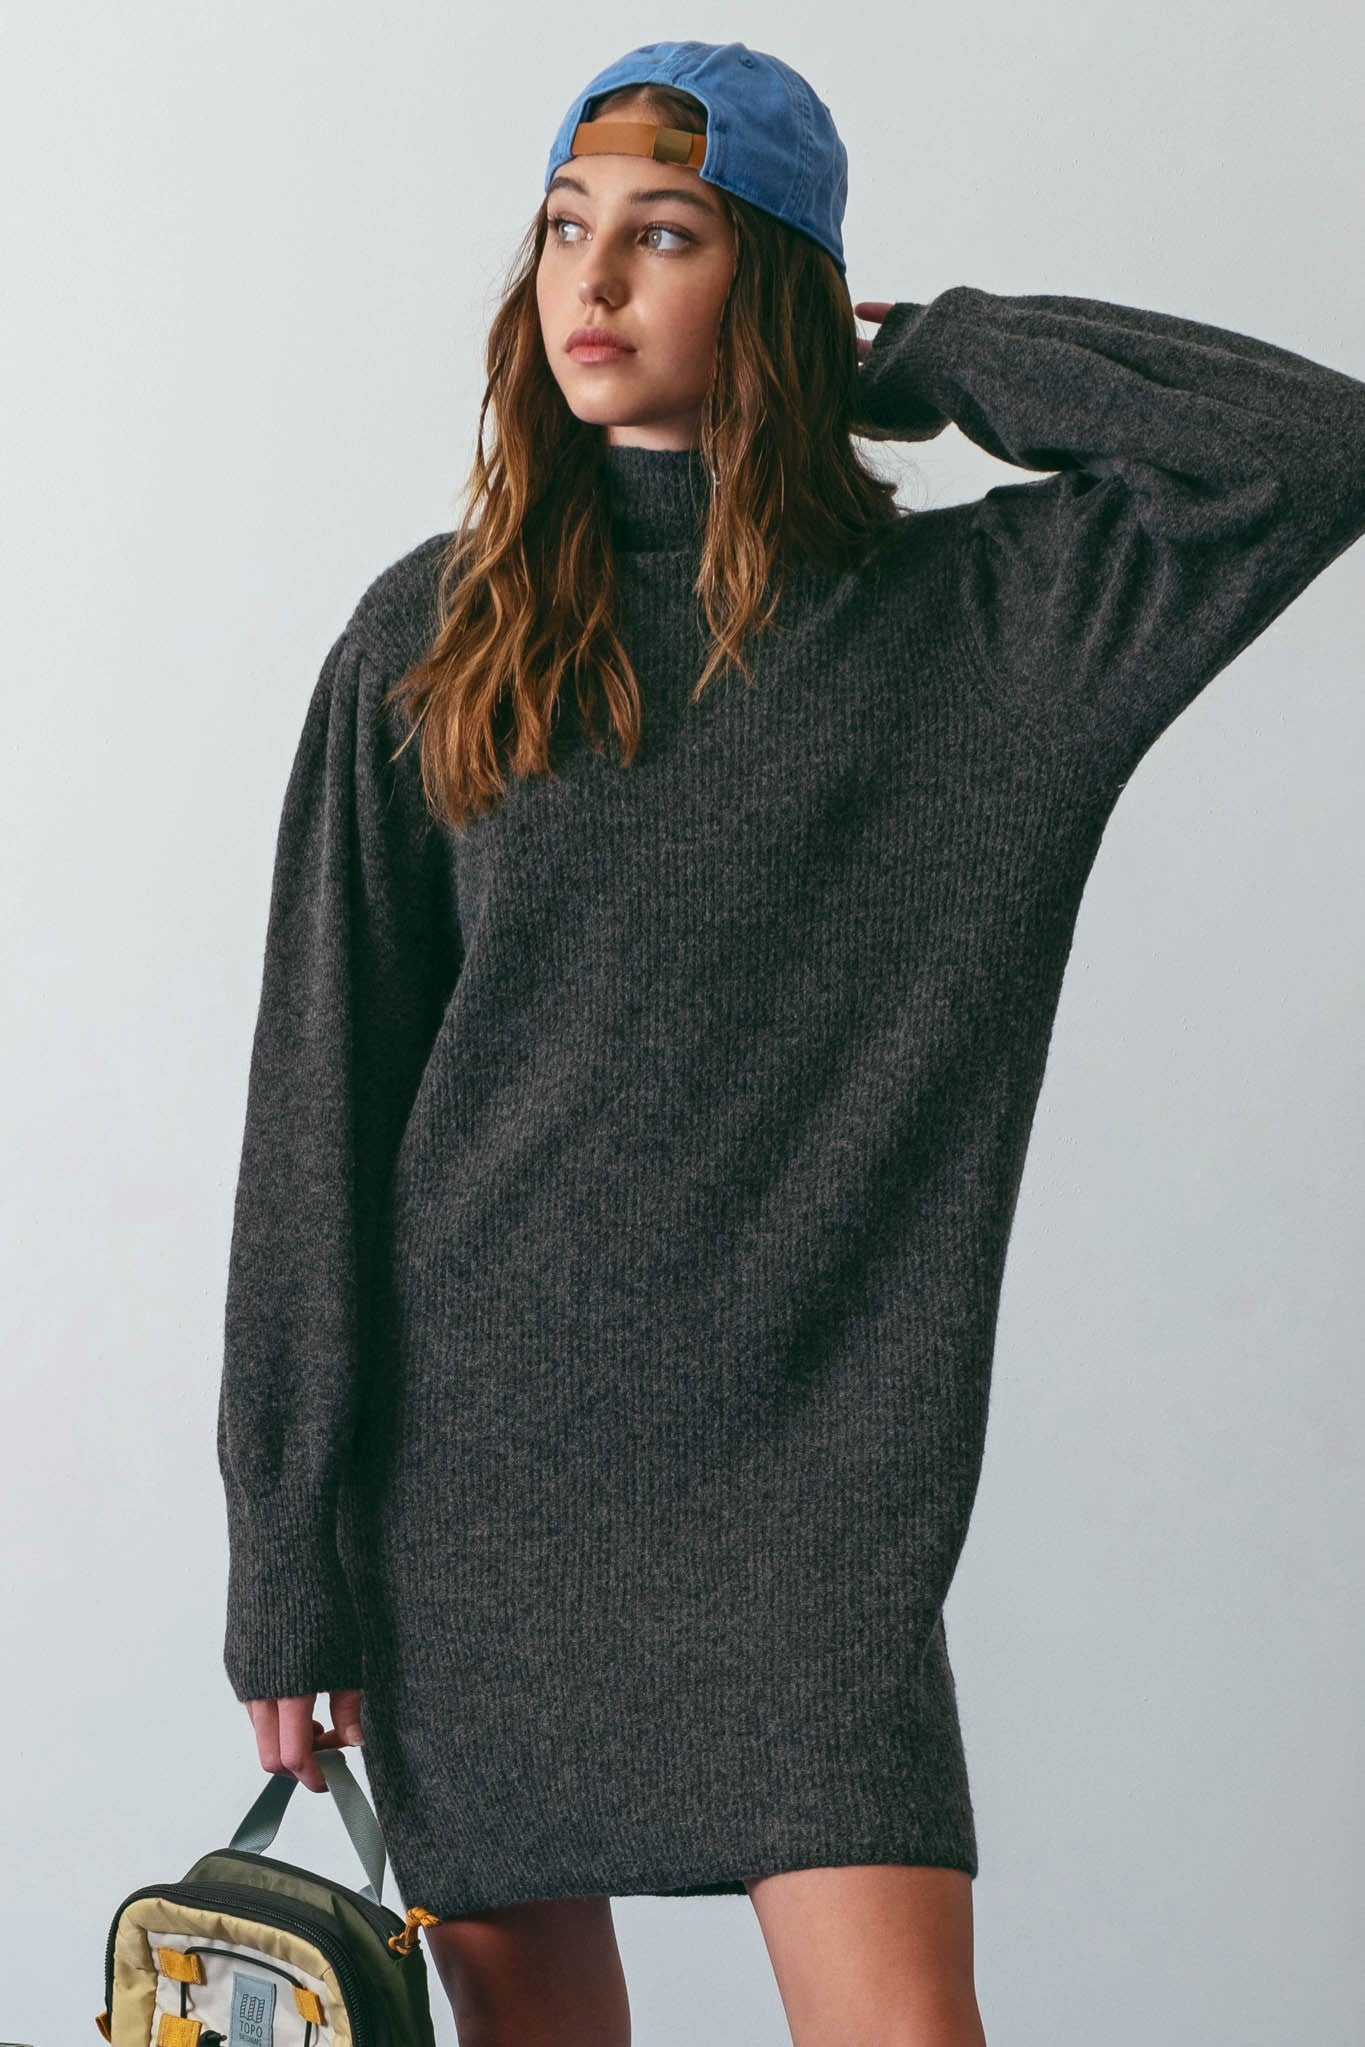 Charcoal sweater dress